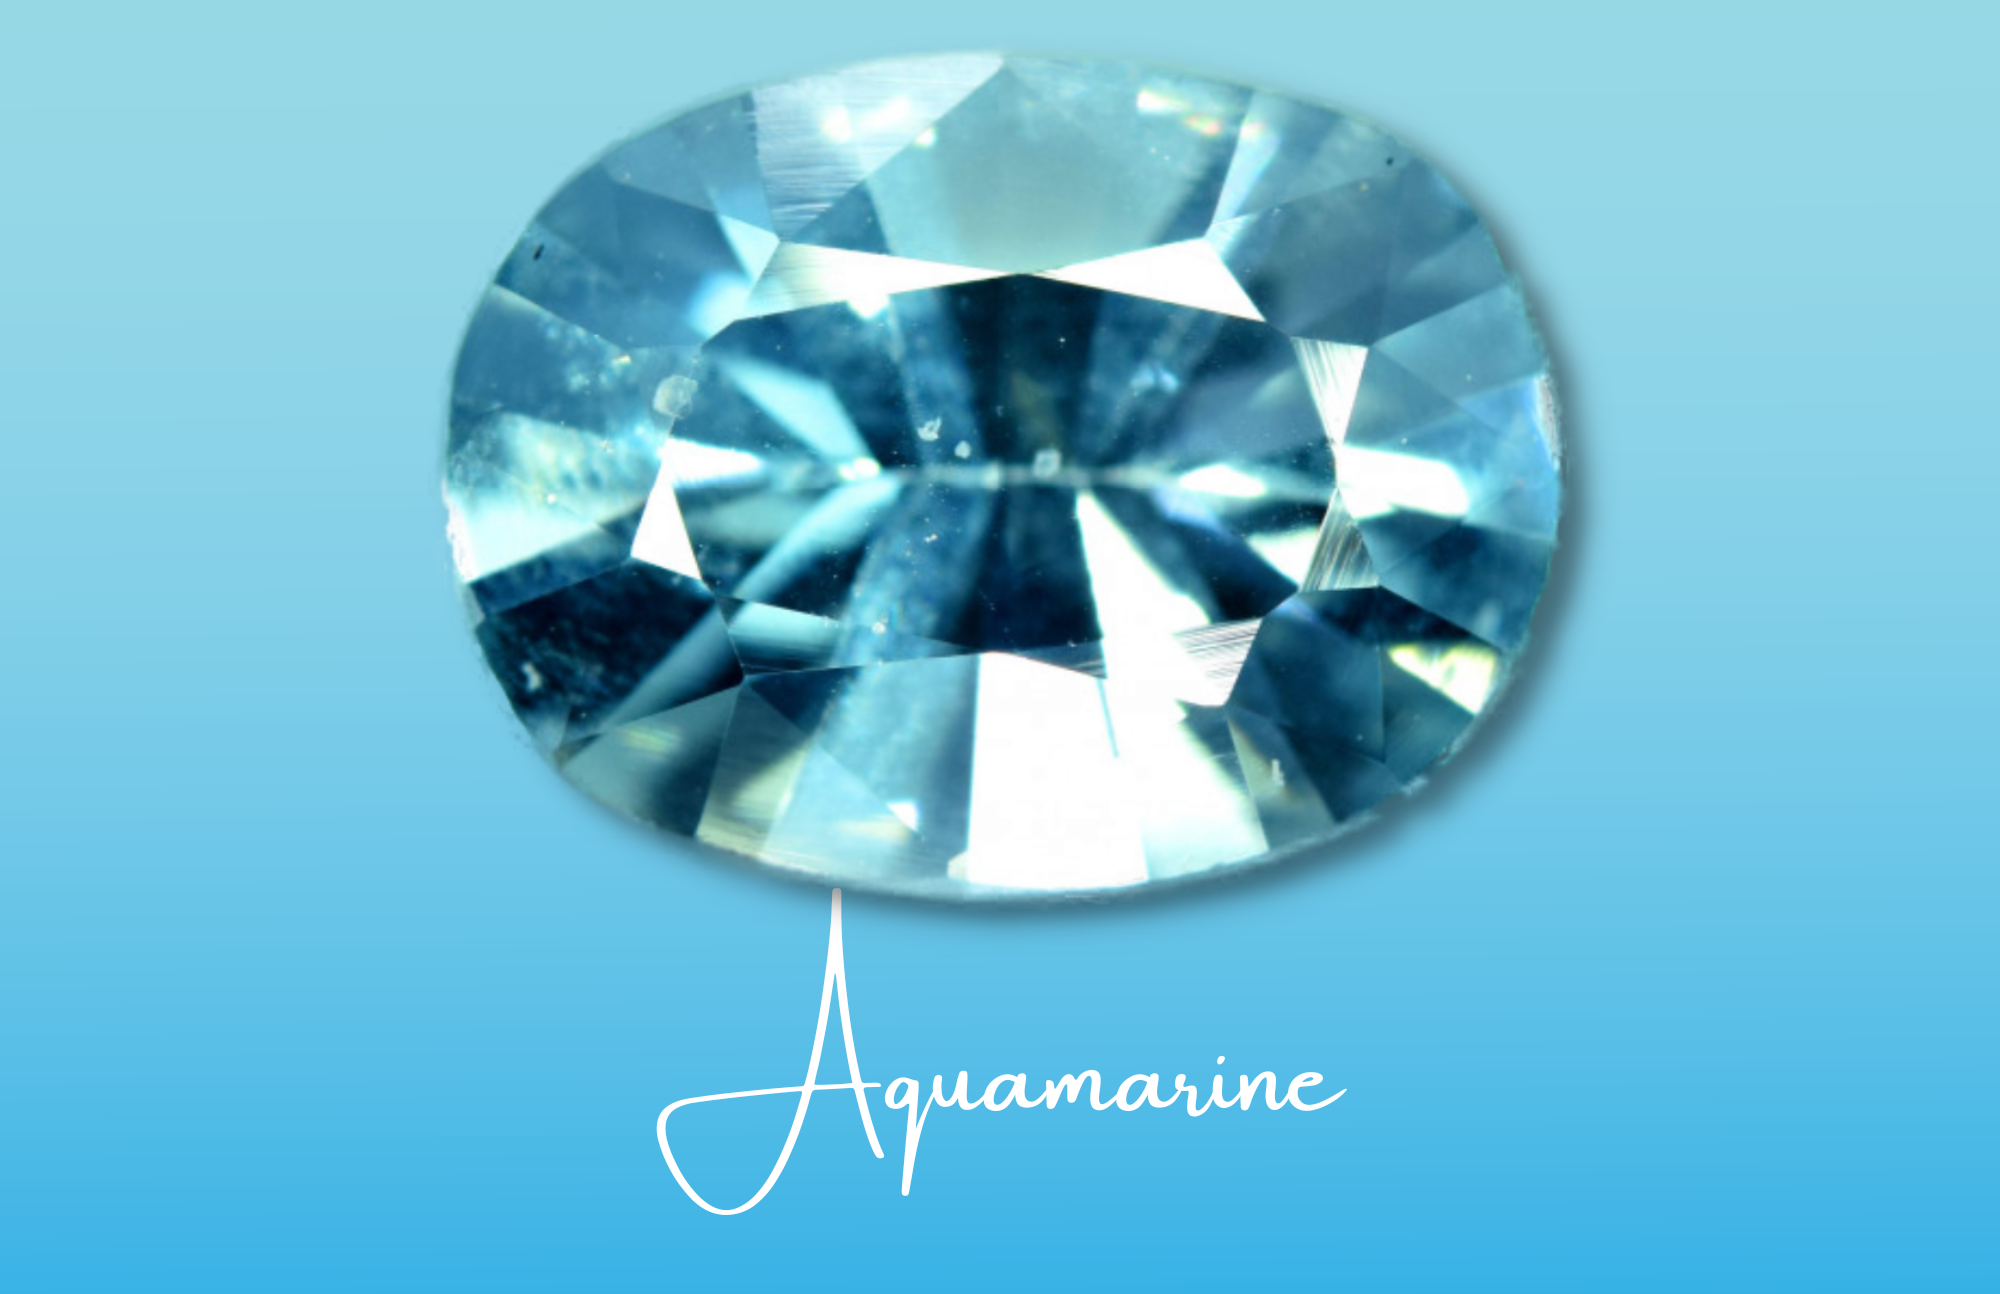 An oblong sky blue aquamarine stone